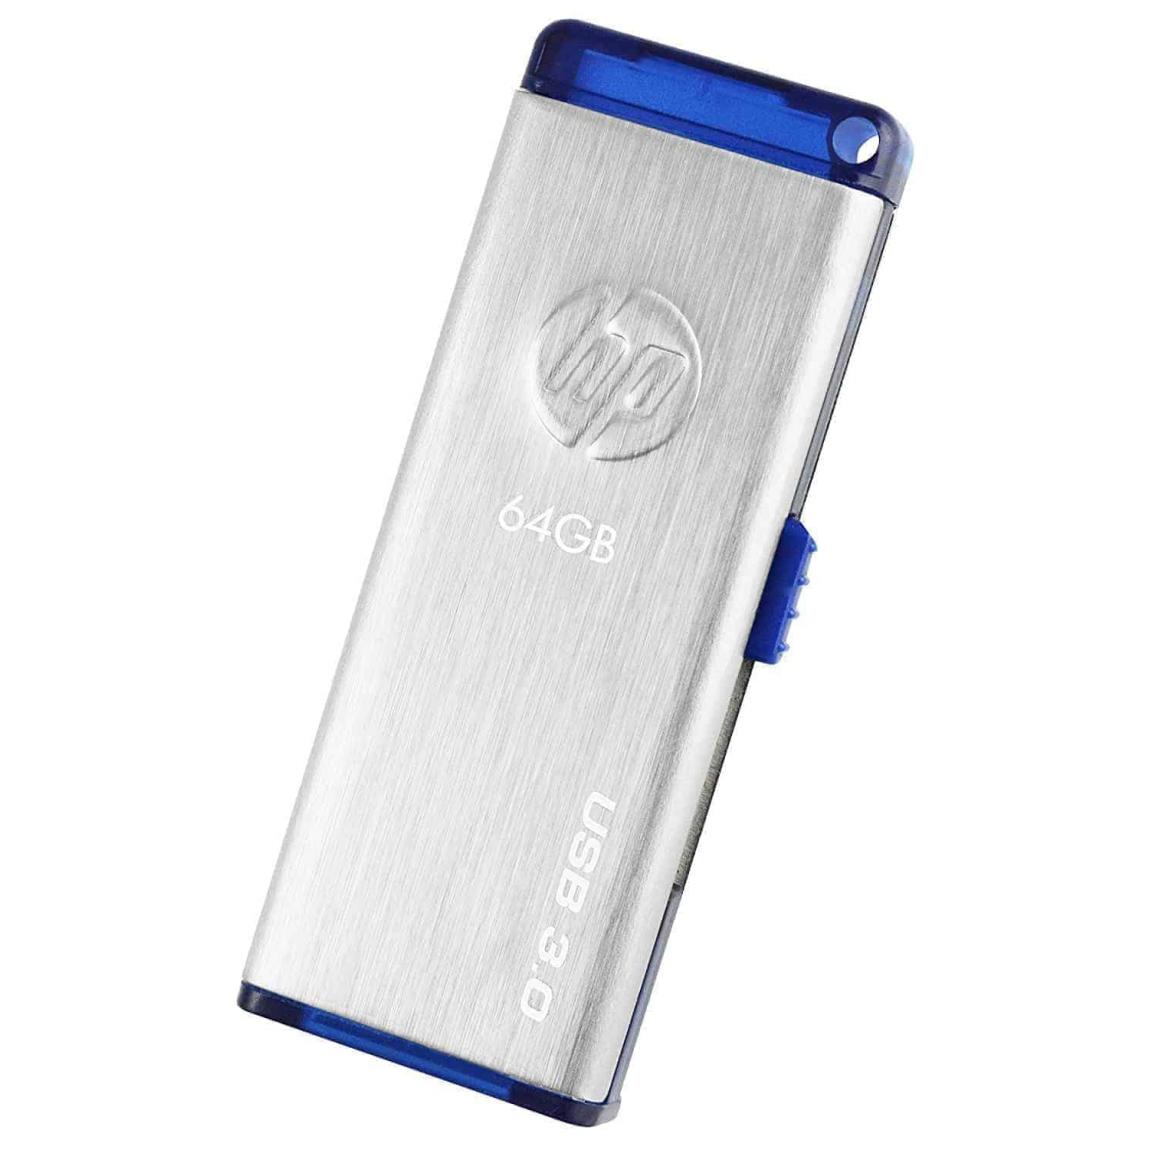 HP x730w 64 GB USB 3.0 Pendrive, Kartmy